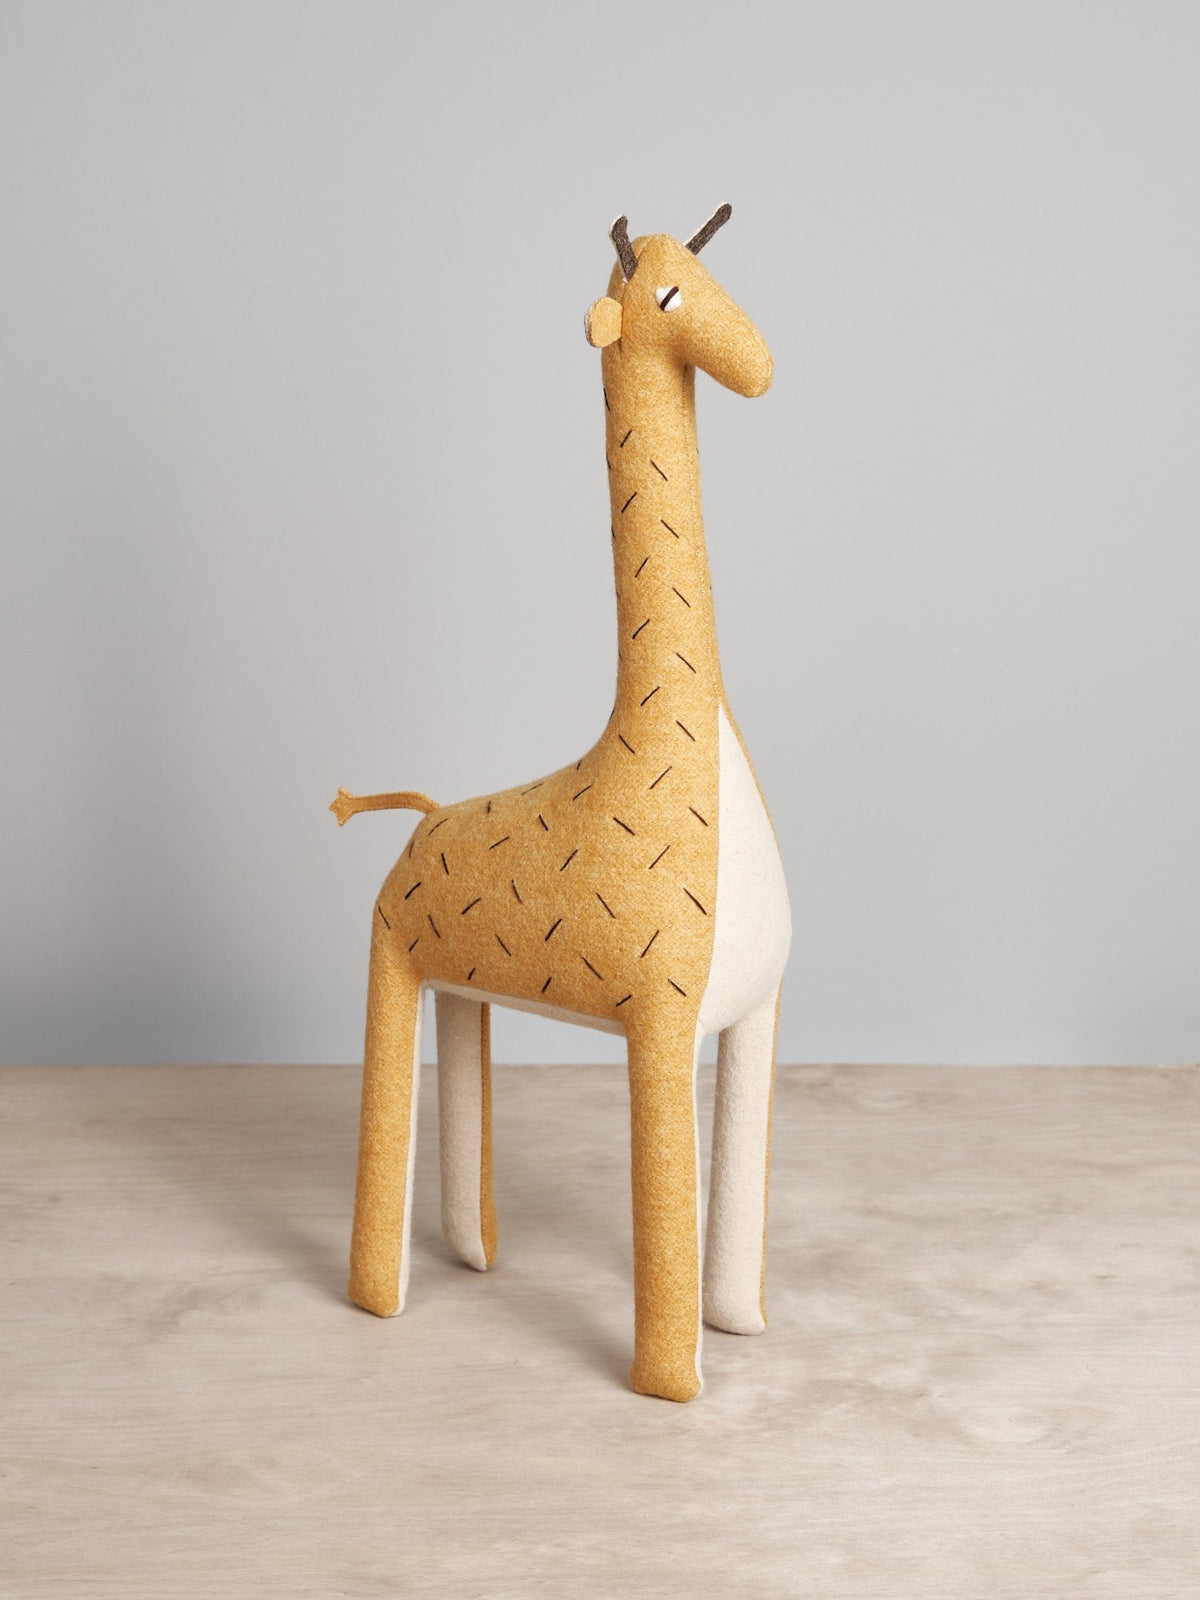 A ZIFFA, the Nubian giraffe, sitting on a wooden table.